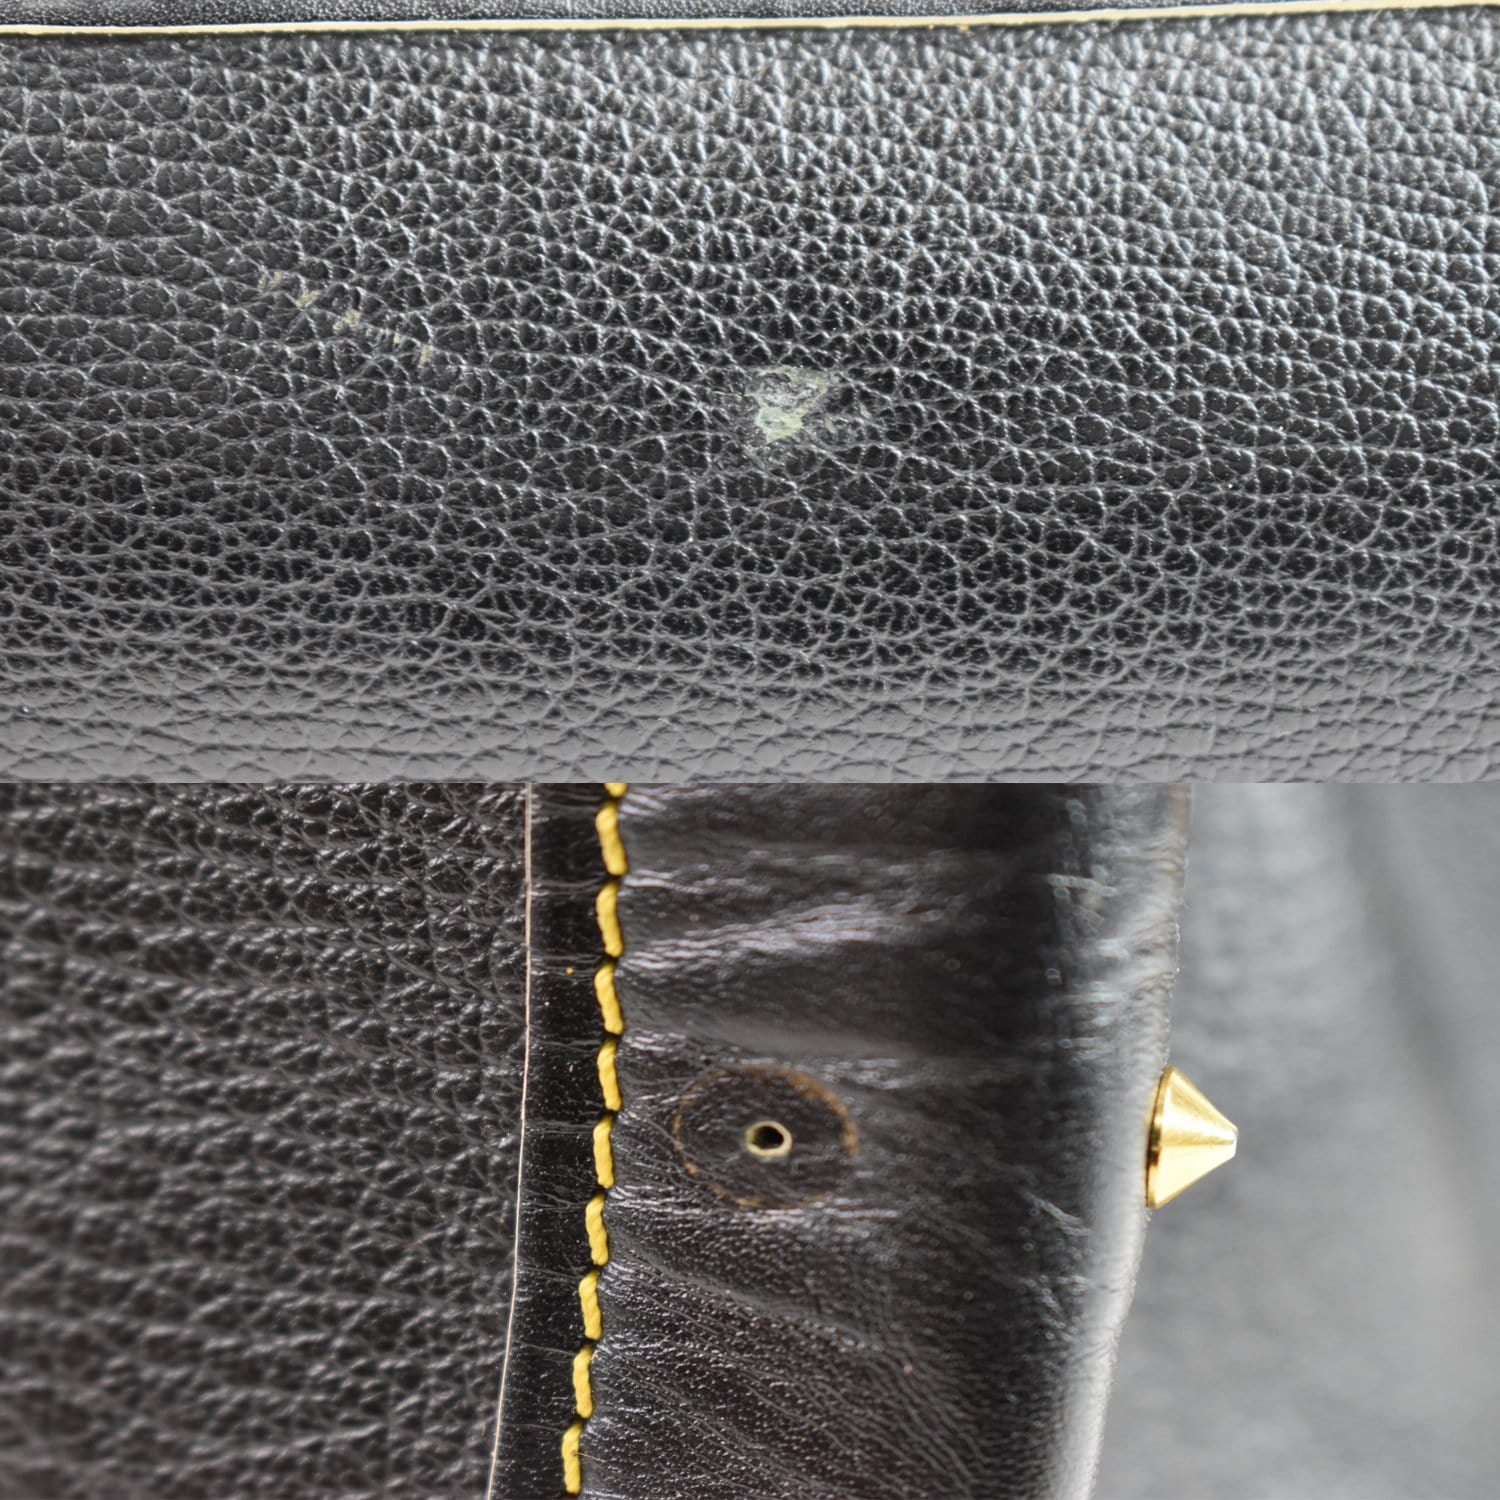 Le fabuleux leather handbag Louis Vuitton Black in Leather - 32681129